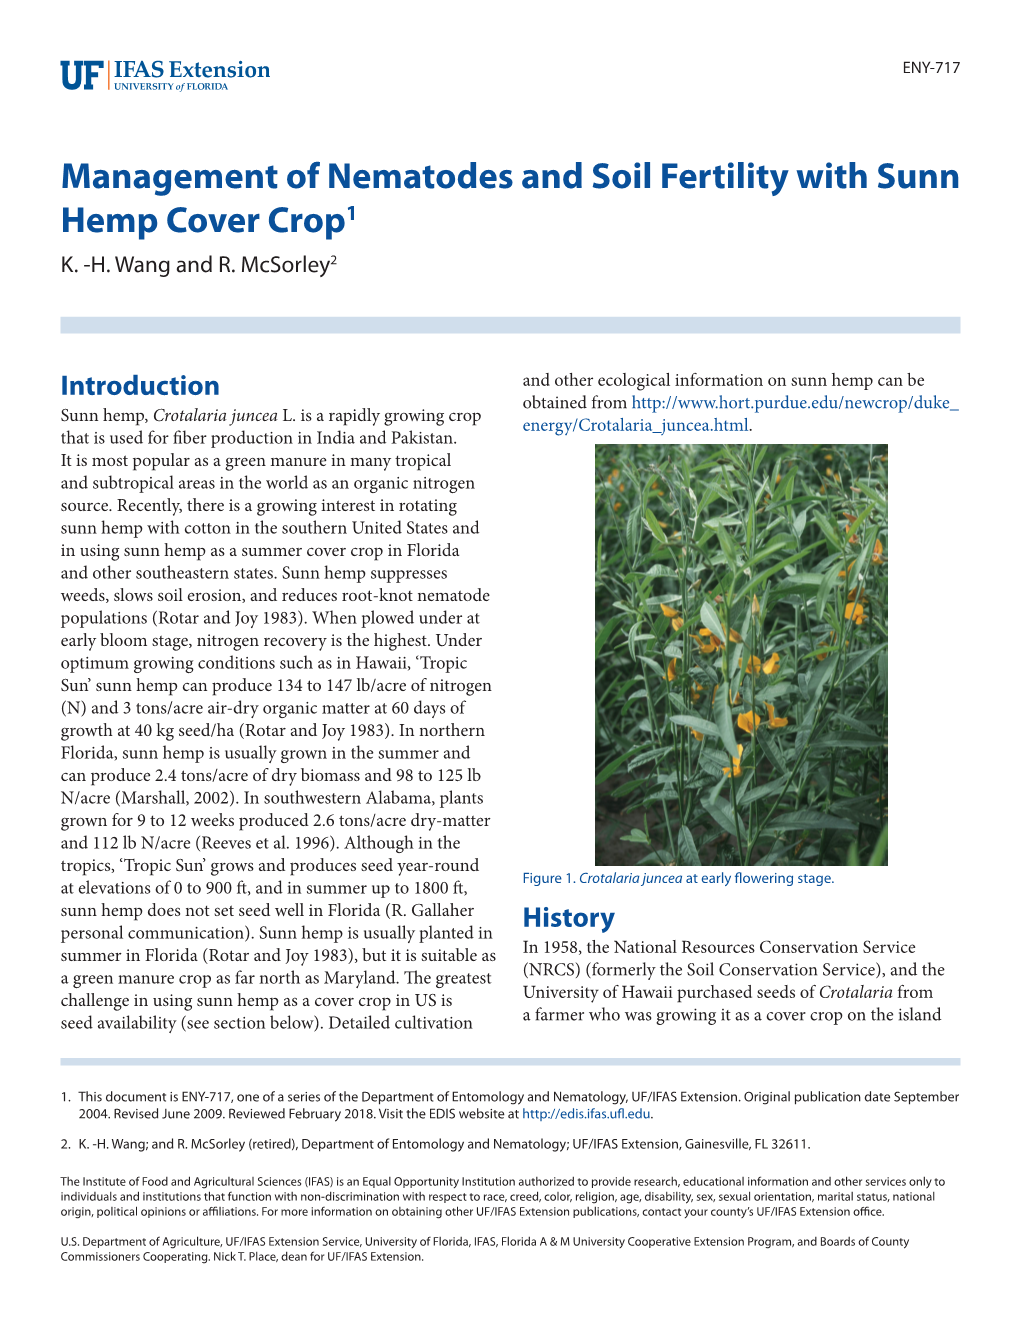 Management of Nematodes and Soil Fertility with Sunn Hemp Cover Crop1 K